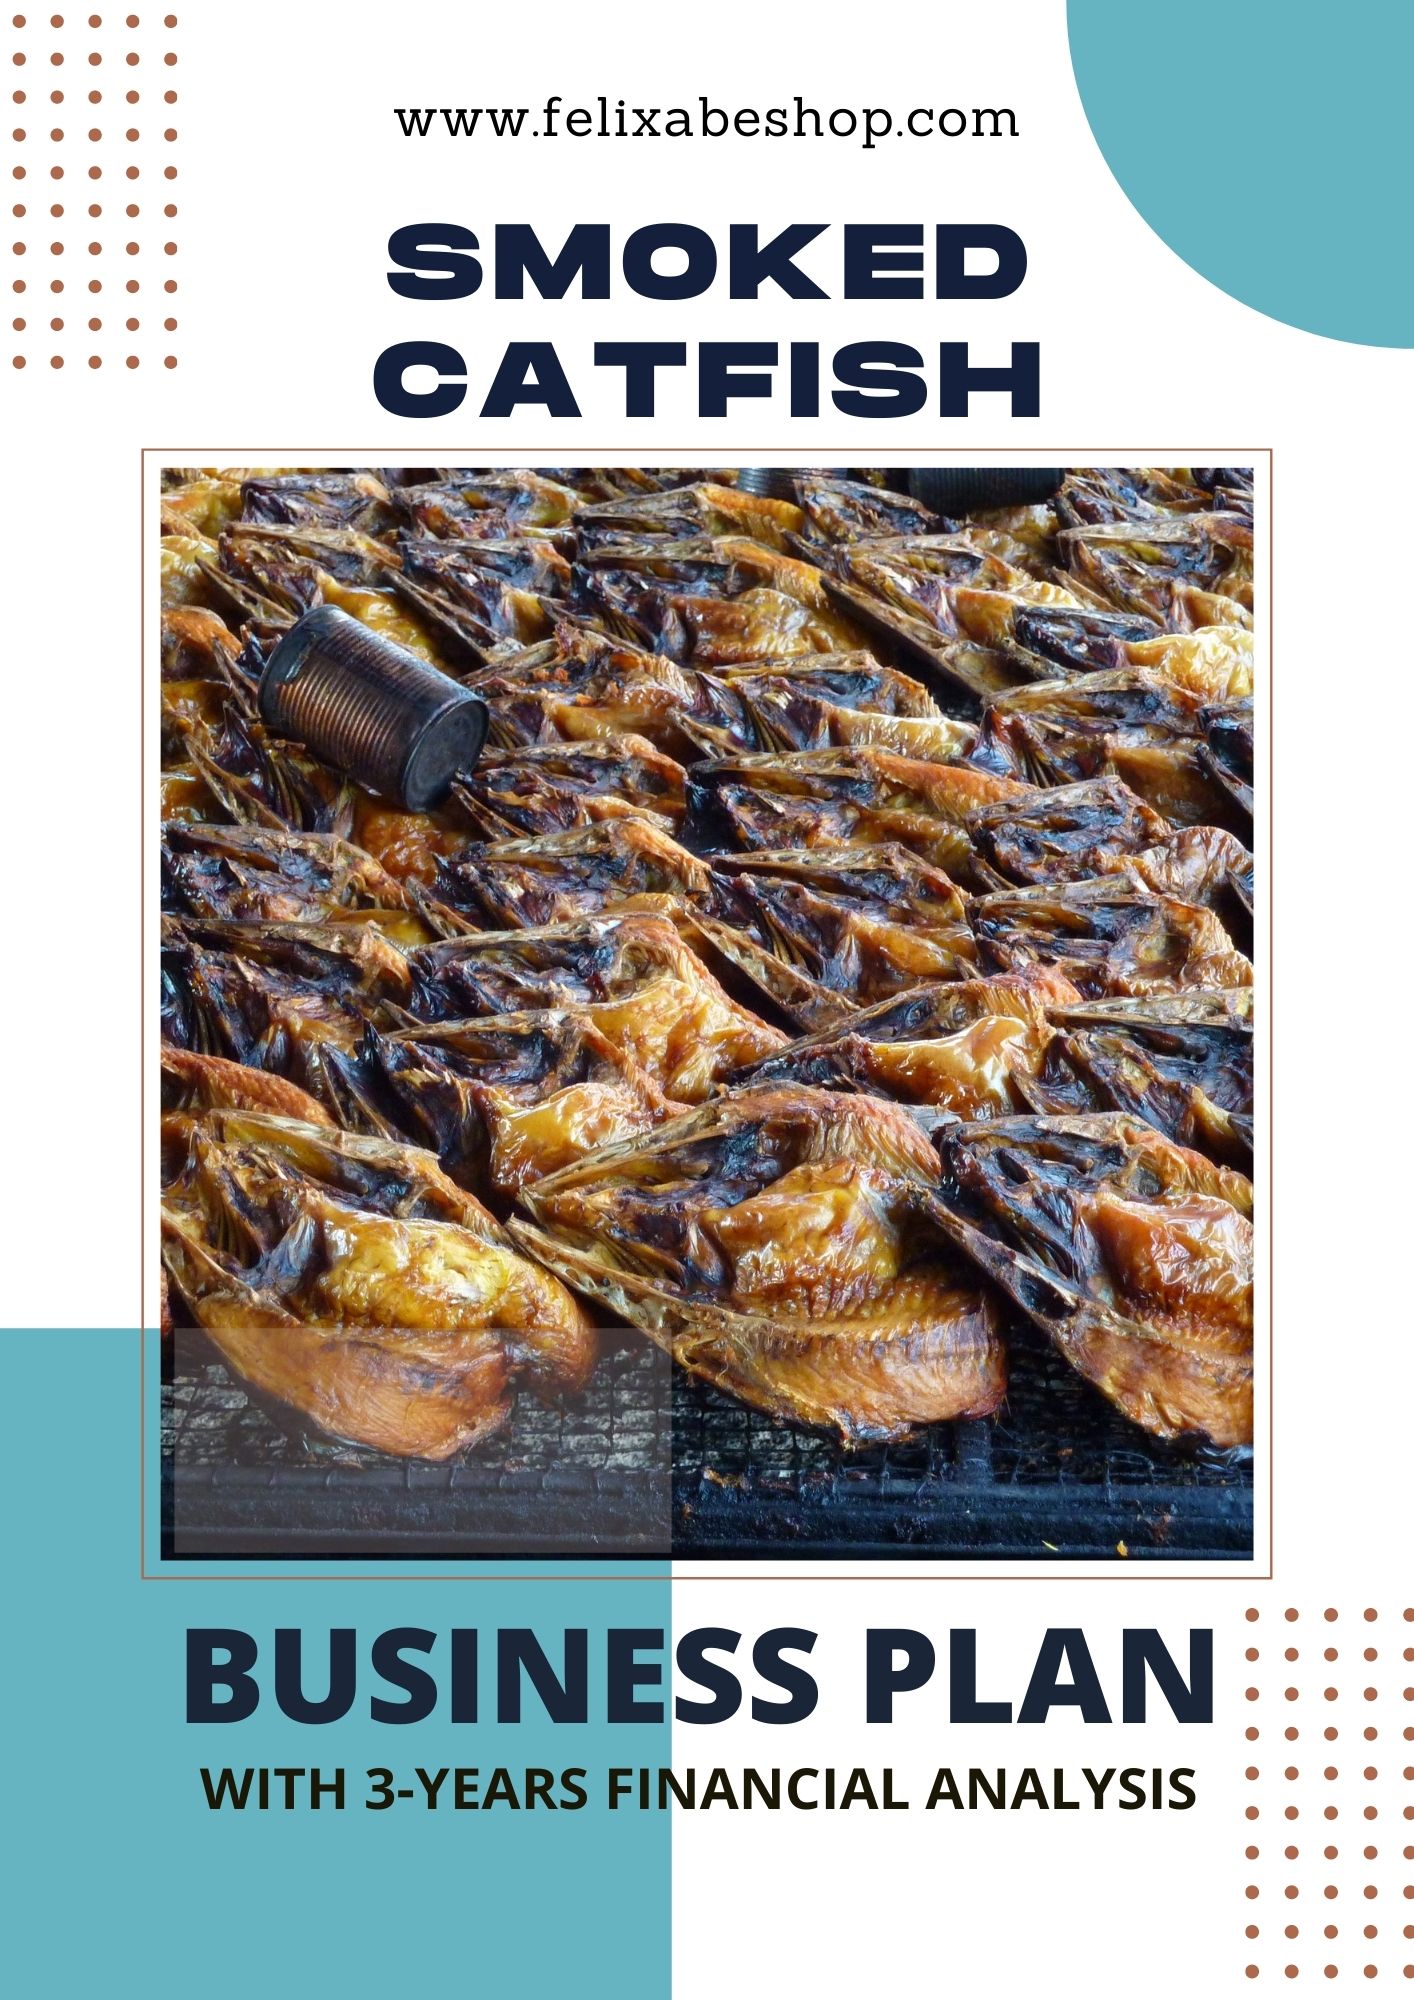 smoked catfish business plan